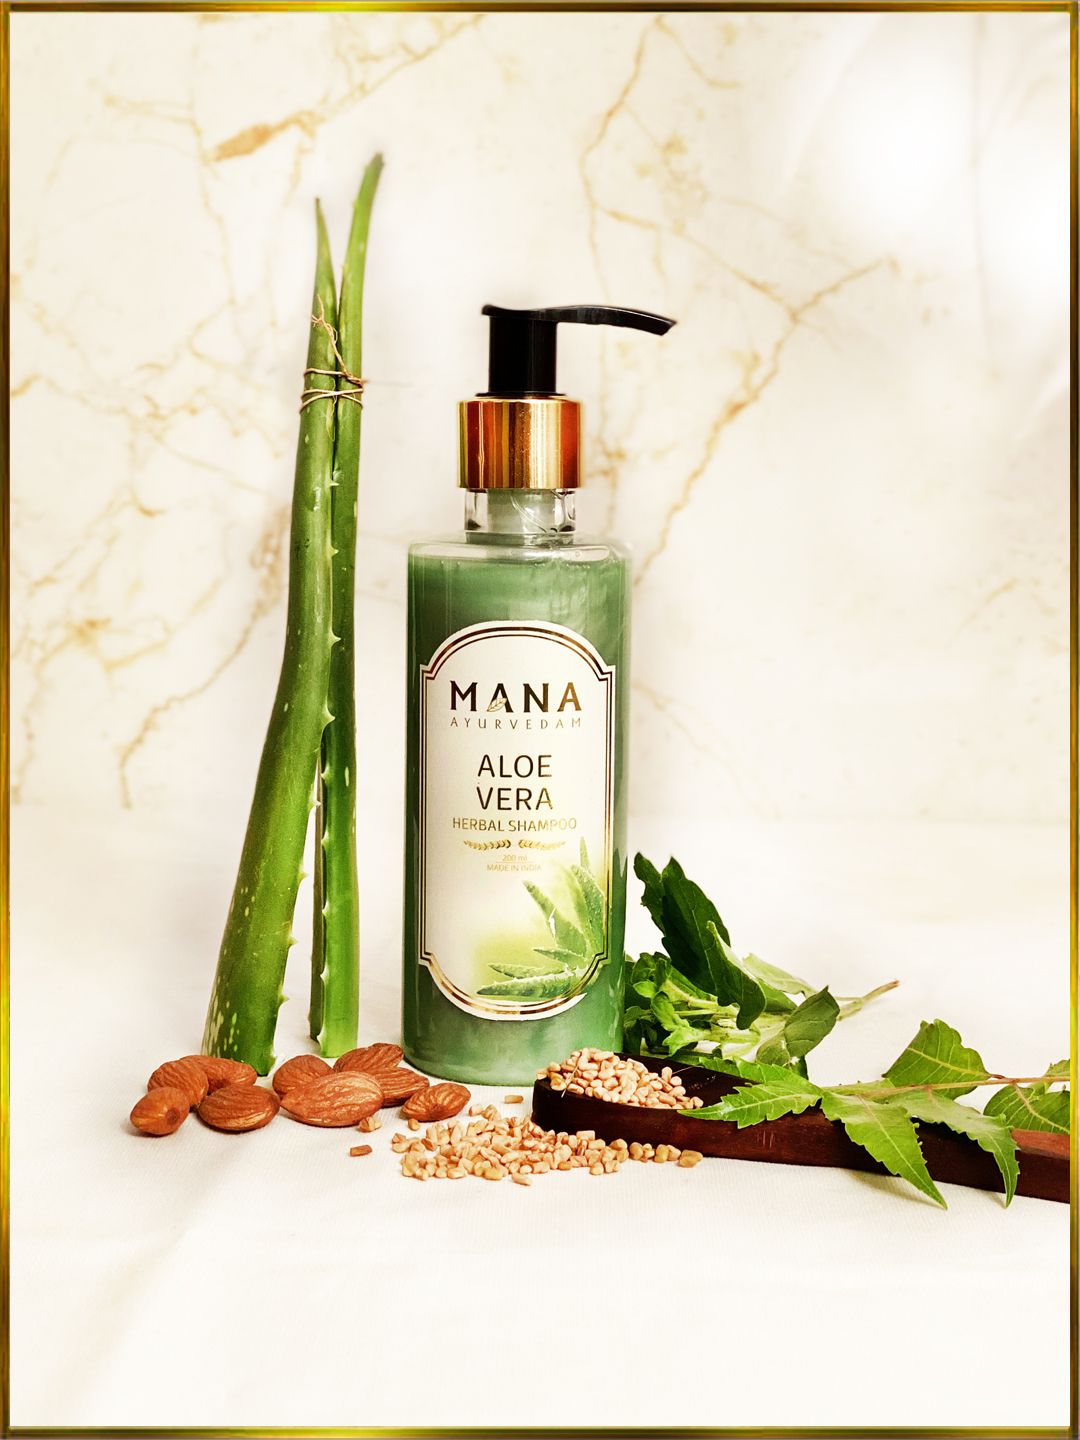 MANA AYURVEDAM Aloe Vera Herbal Shampoo for Hair Growth 200ml Price in India